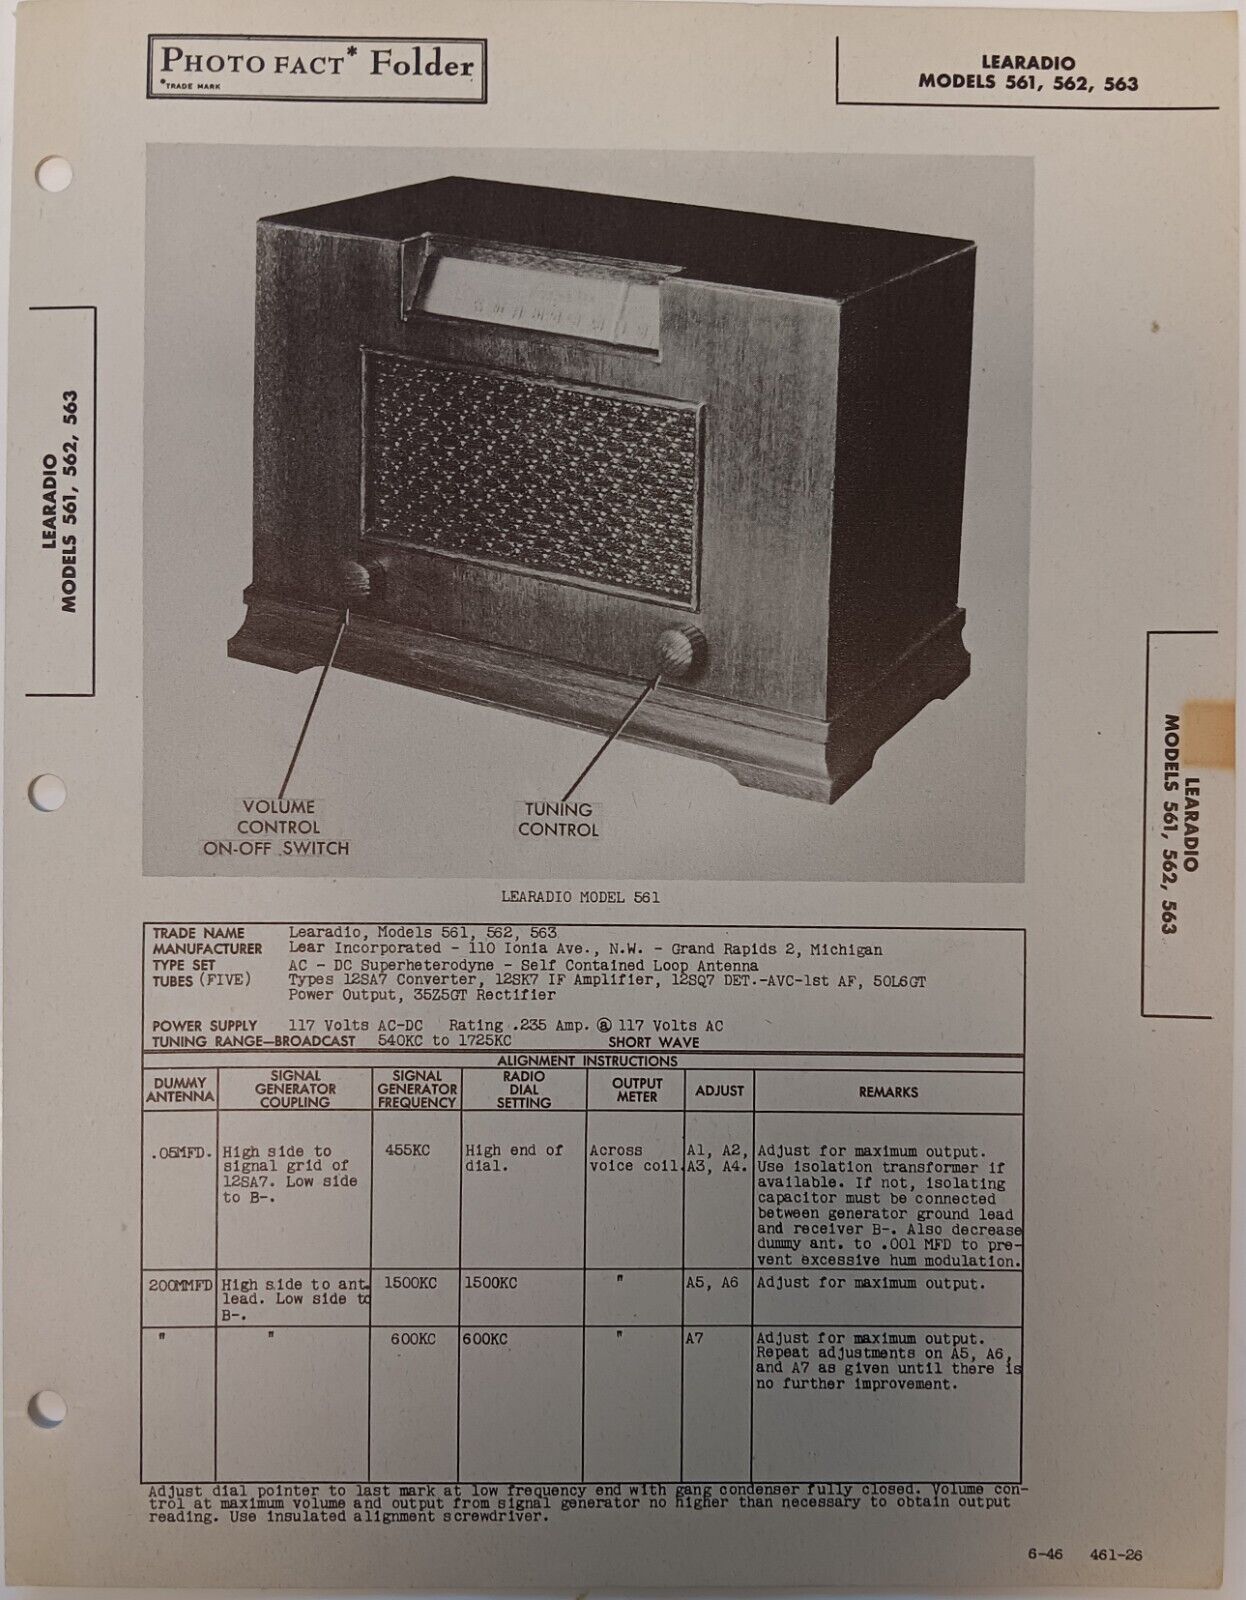 Photo Fact Data 1946 Learadio Models 561, 562, 563 Broadcast Radios.